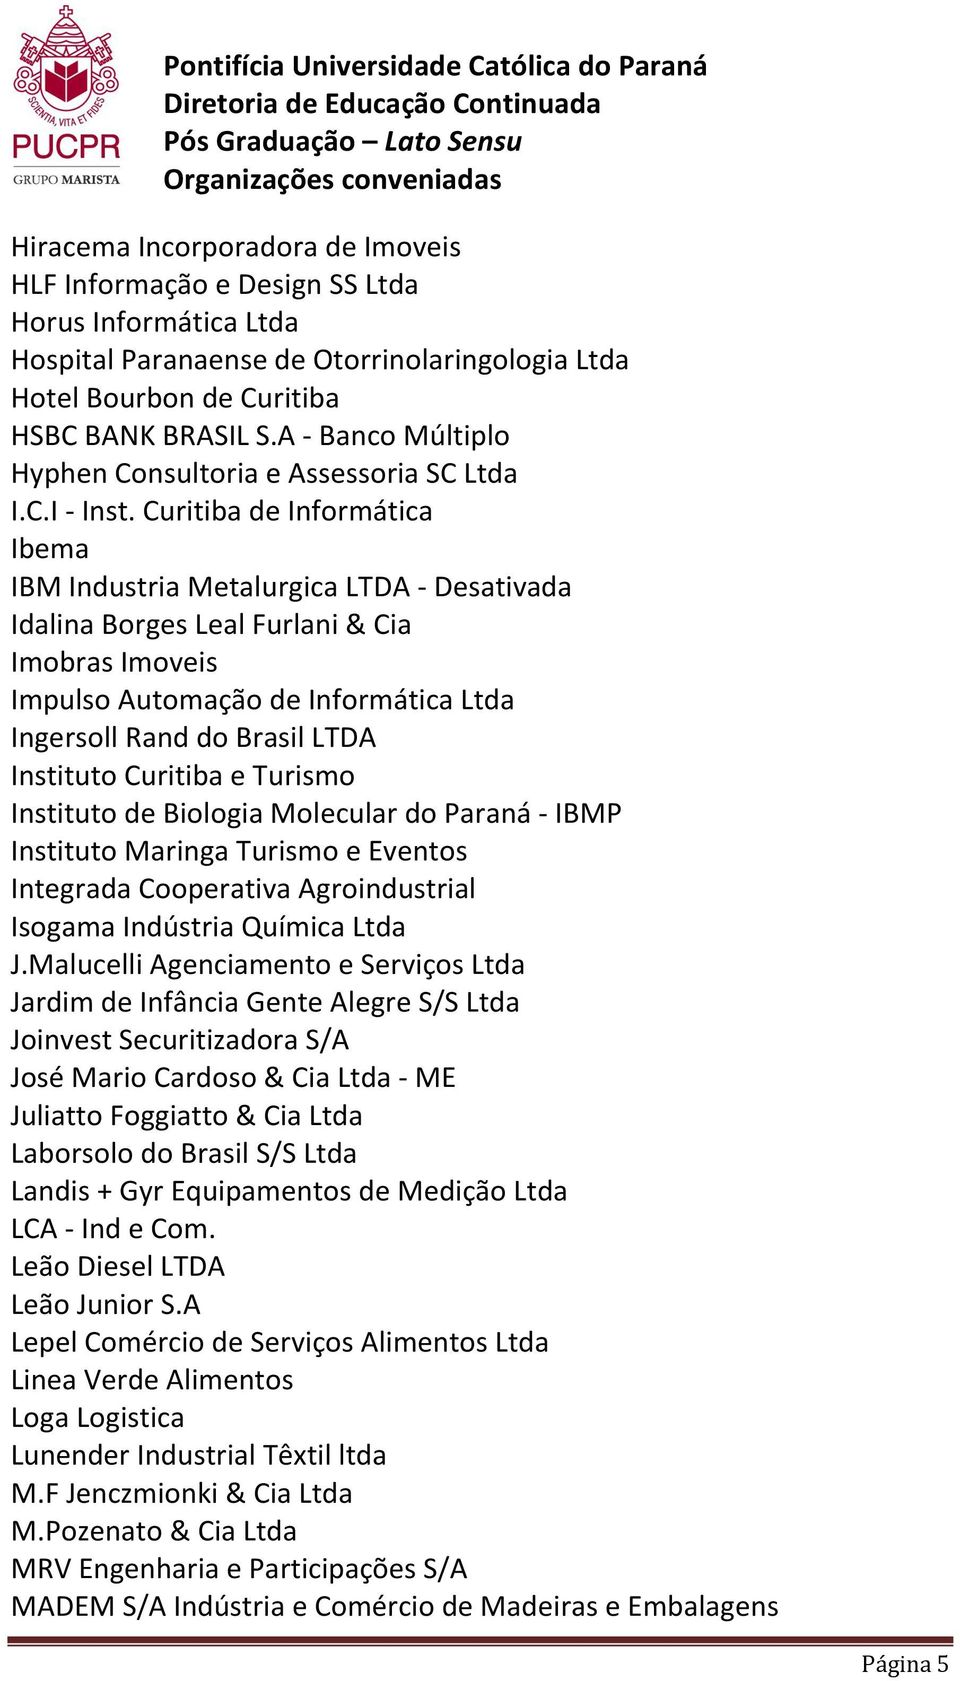 Curitiba de Informática Ibema IBM Industria Metalurgica LTDA - Desativada Idalina Borges Leal Furlani & Cia Imobras Imoveis Impulso Automação de Informática Ltda Ingersoll Rand do Brasil LTDA